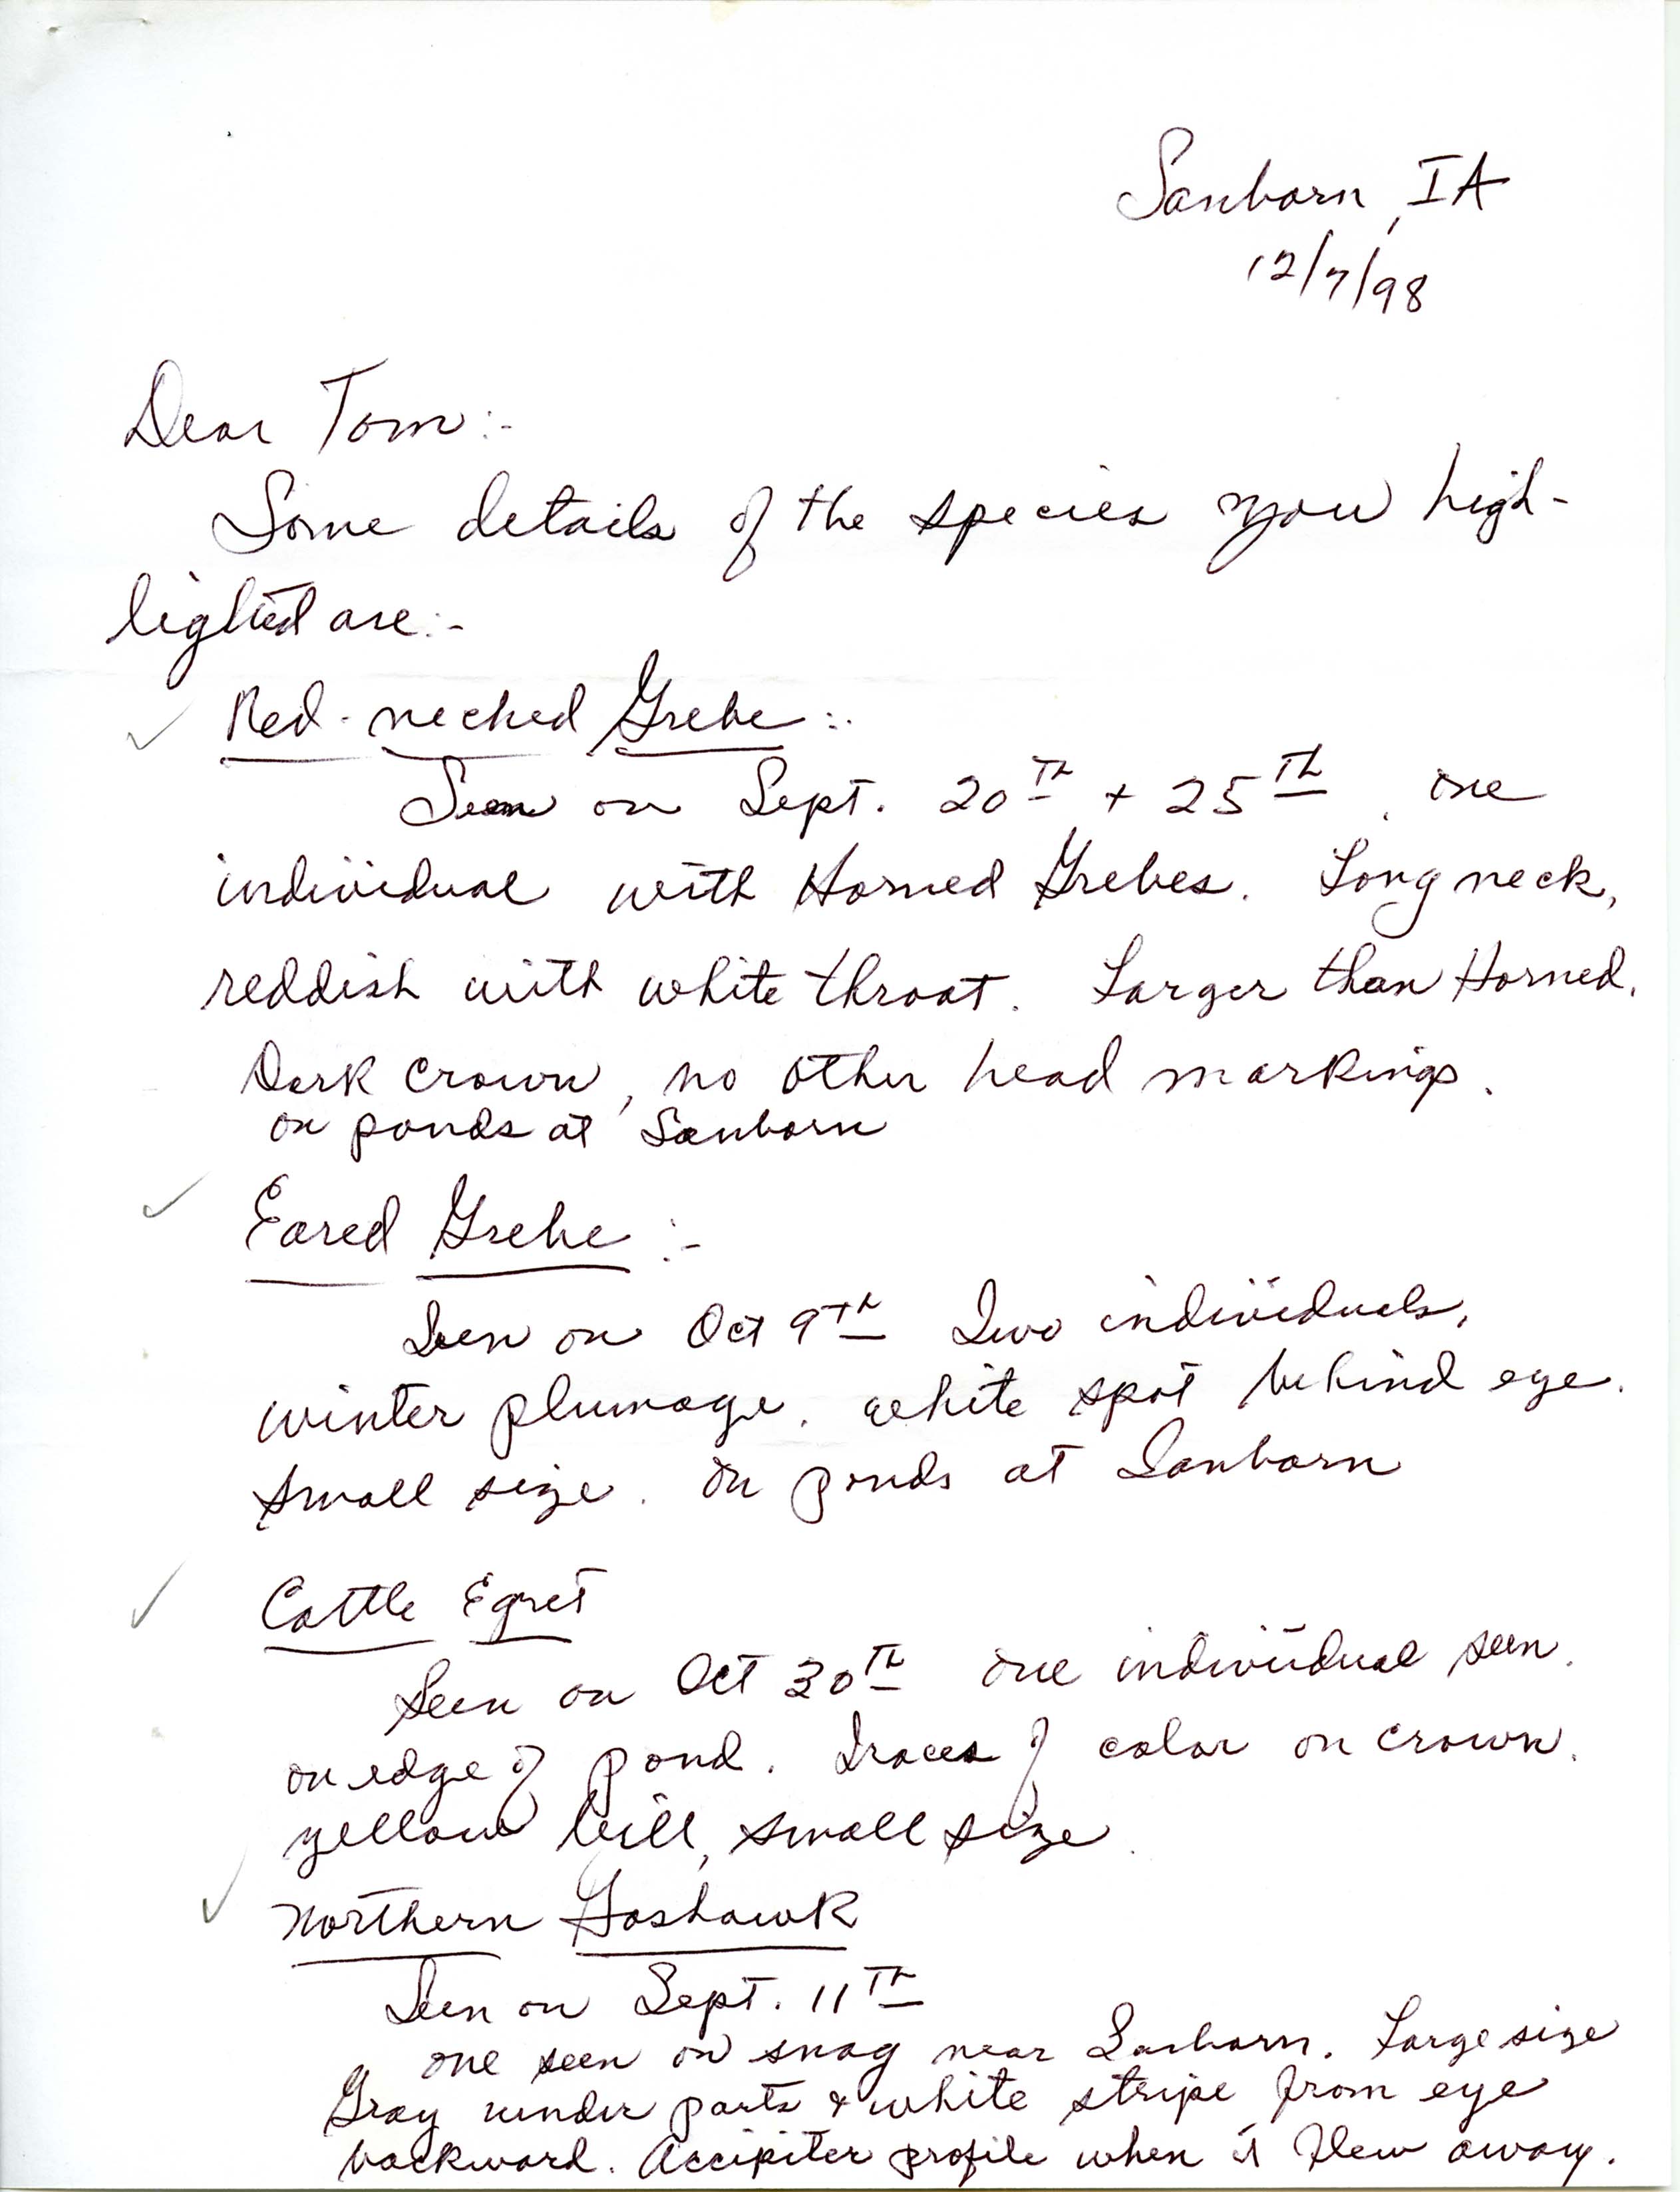 Robert Gruenewald letter to Thomas H. Kent regarding details on fall bird sightings, December 7, 1998